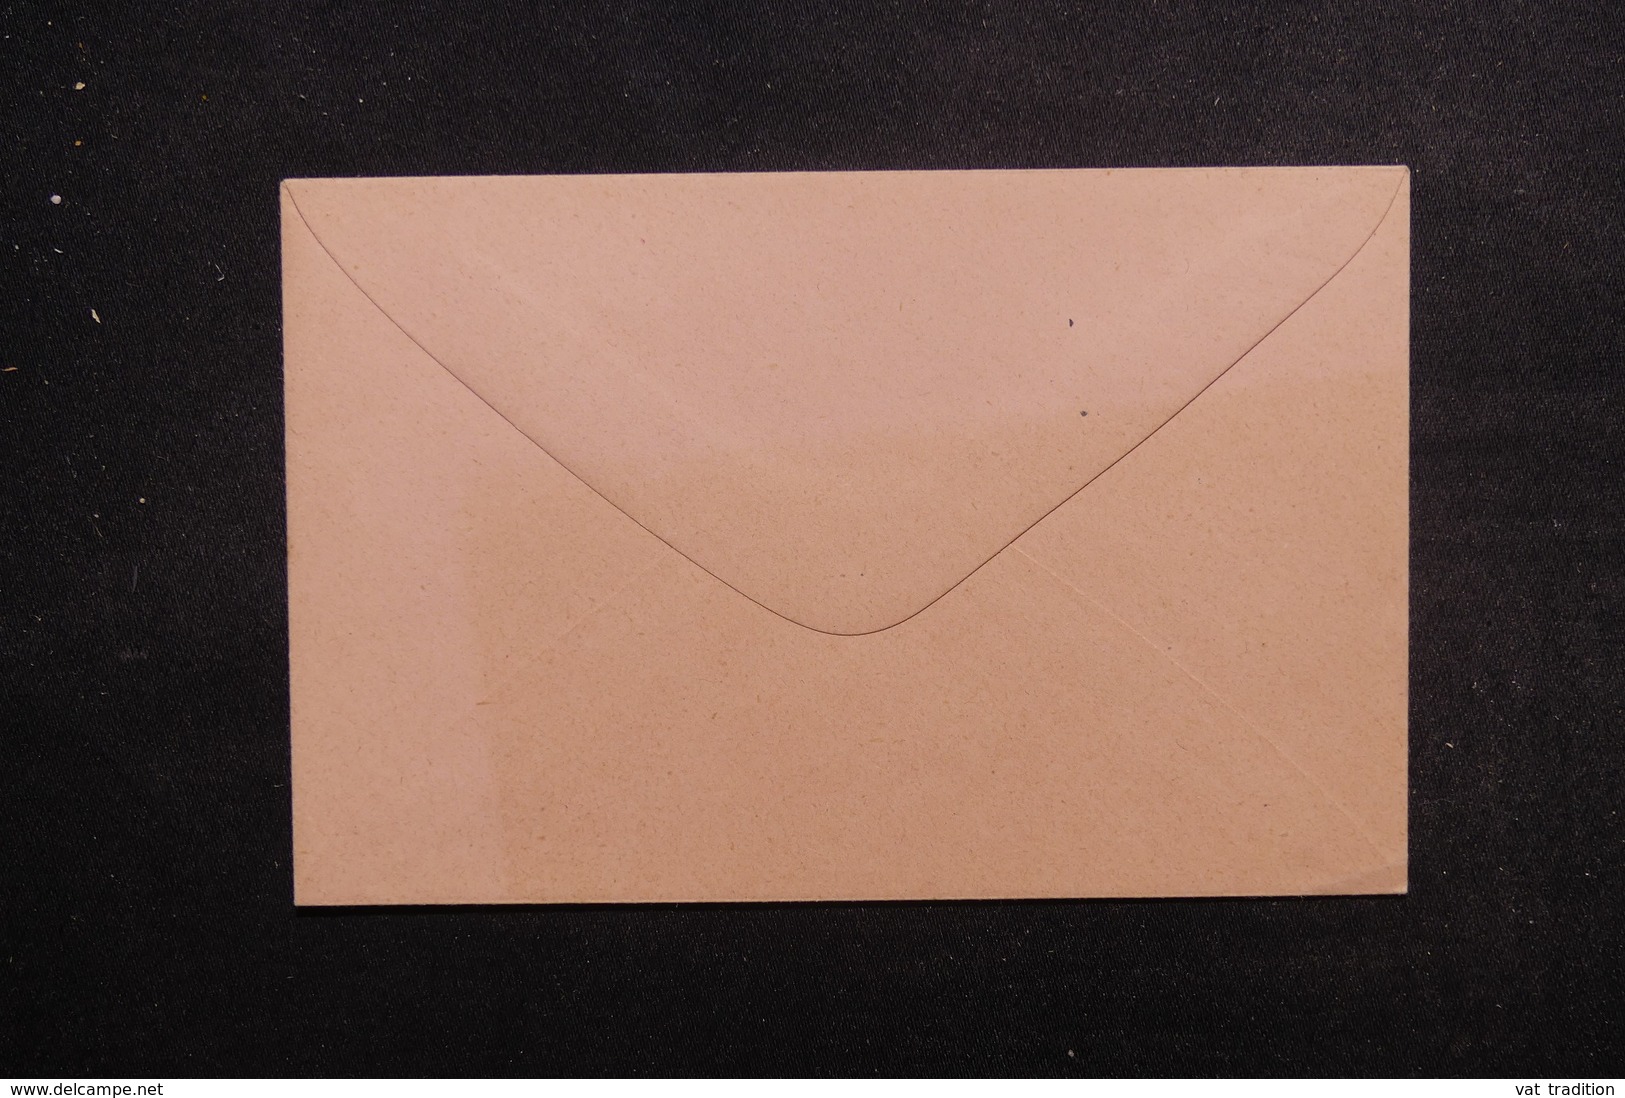 NOSSI BE - Entier Postal Au Type Groupe, Non Circulé - L 49394 - Cartas & Documentos